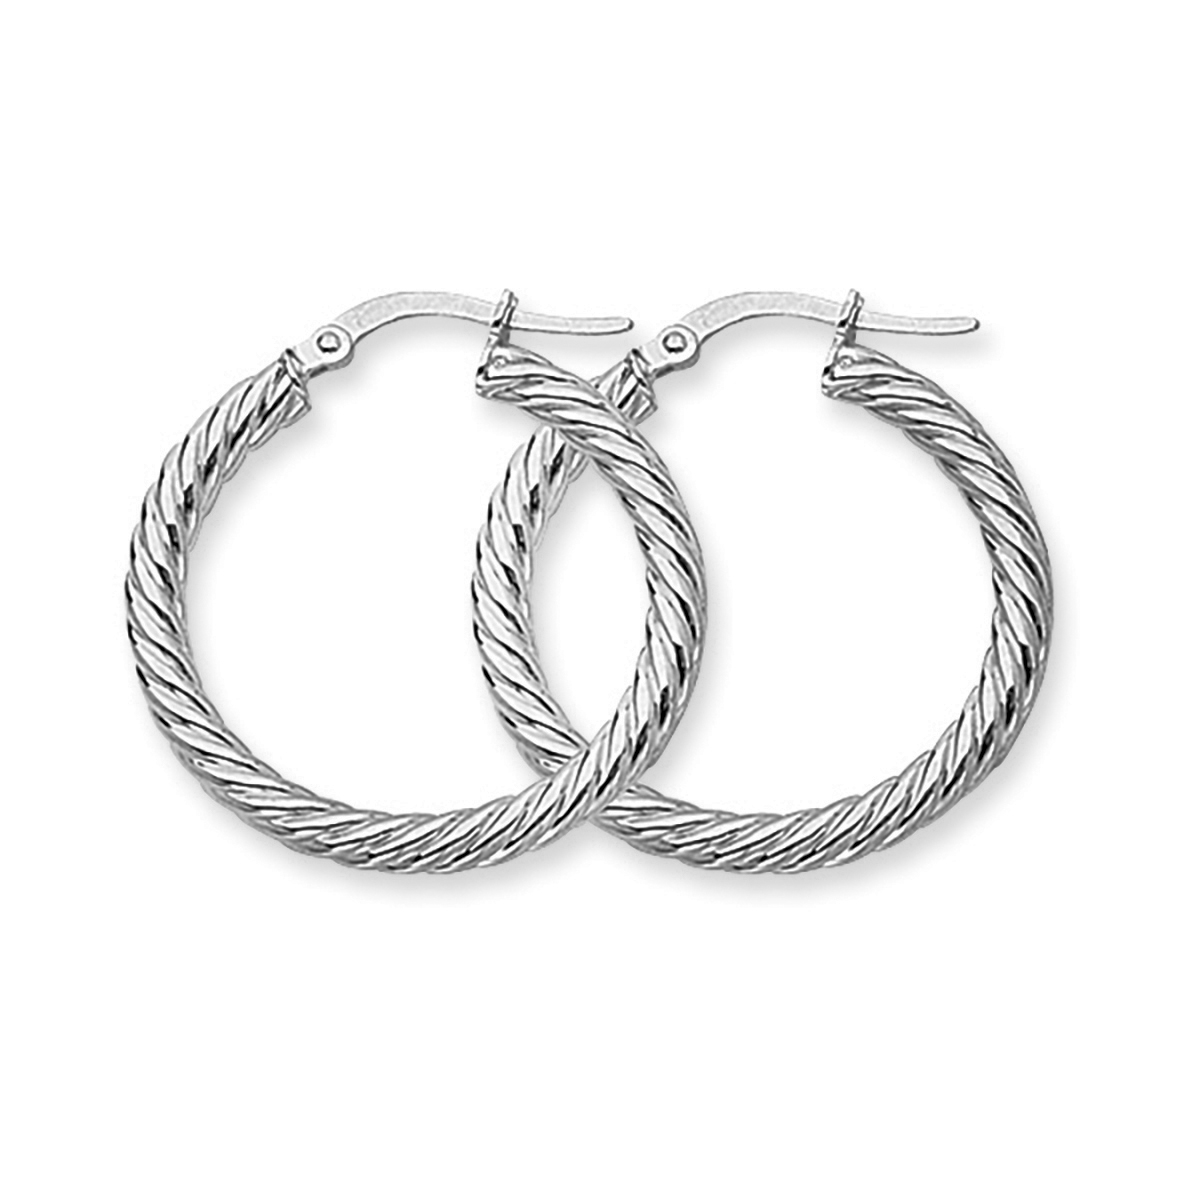 Twisted Rope White Gold Hoop Earrings 25 Mm Borsheims 5034